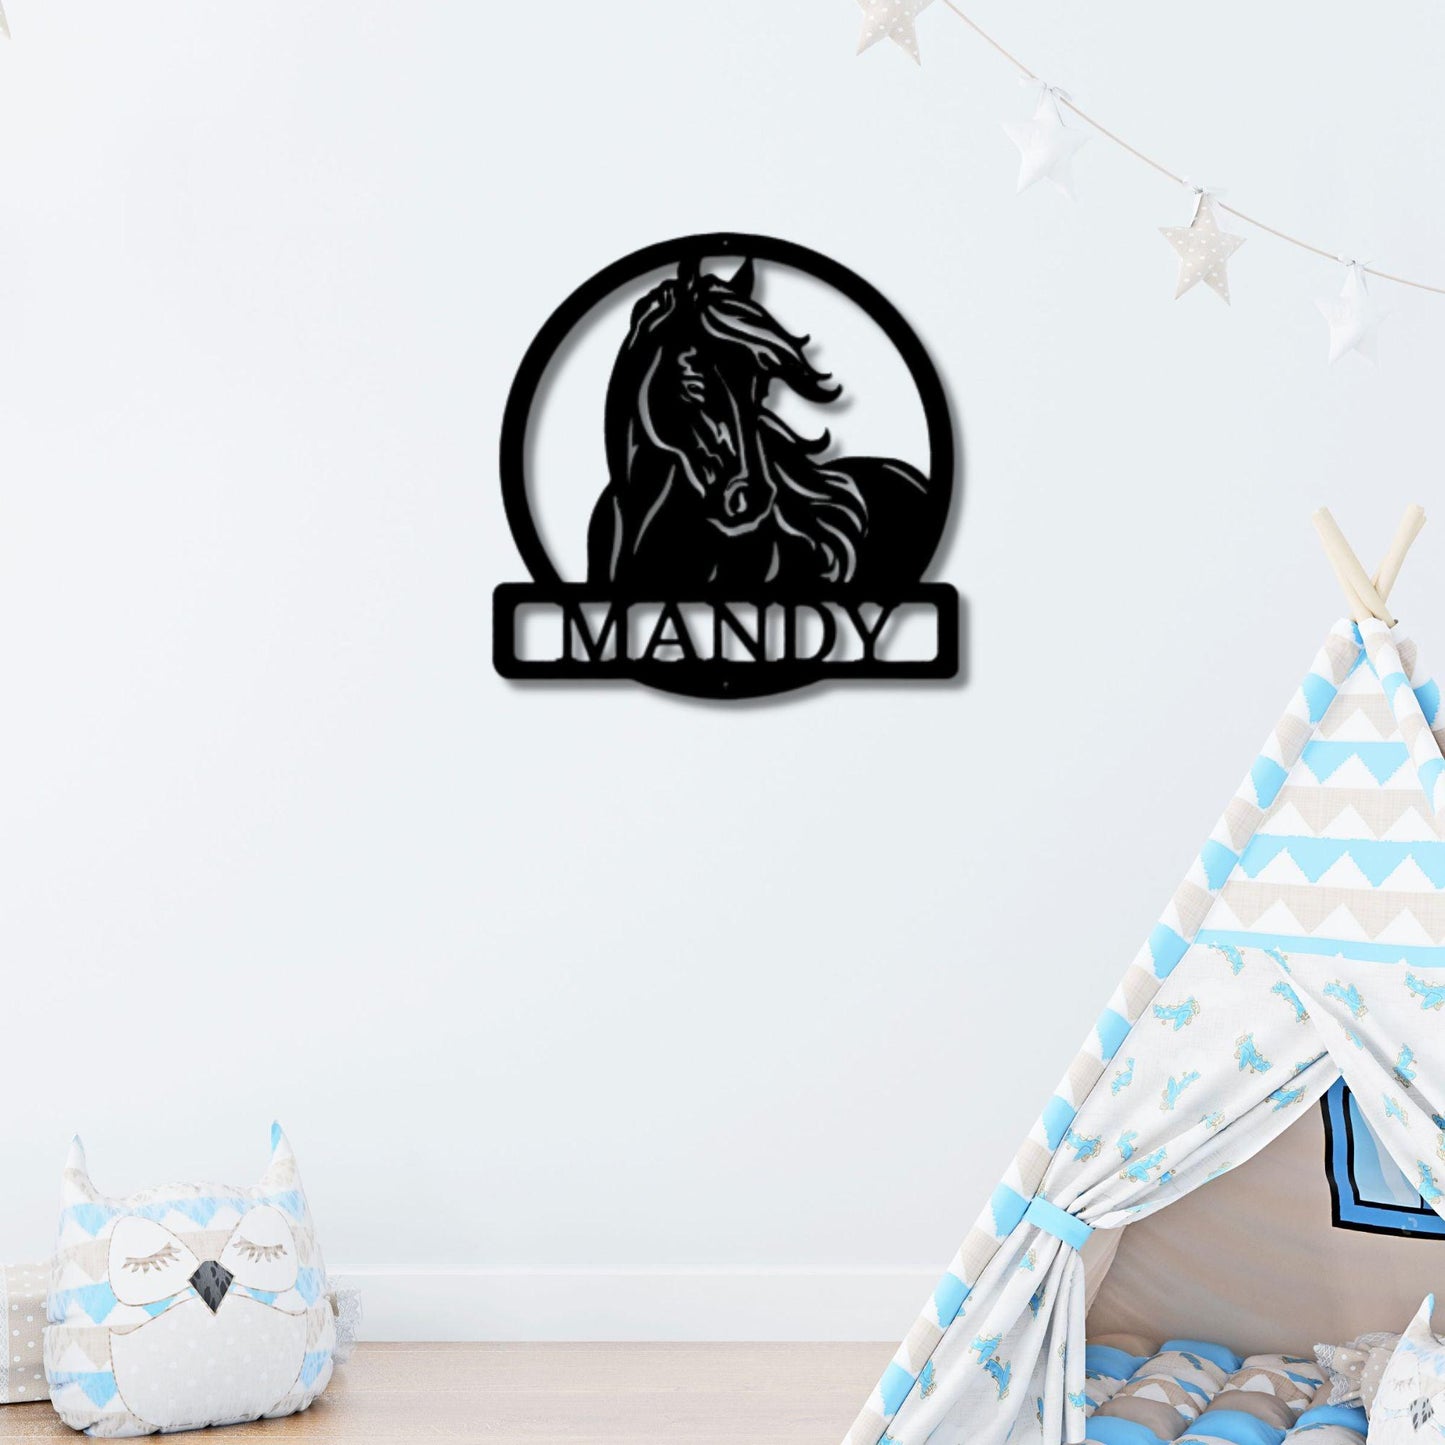 Horse Personalized Metal Wall Art Sign - Mallard Moon Gift Shop